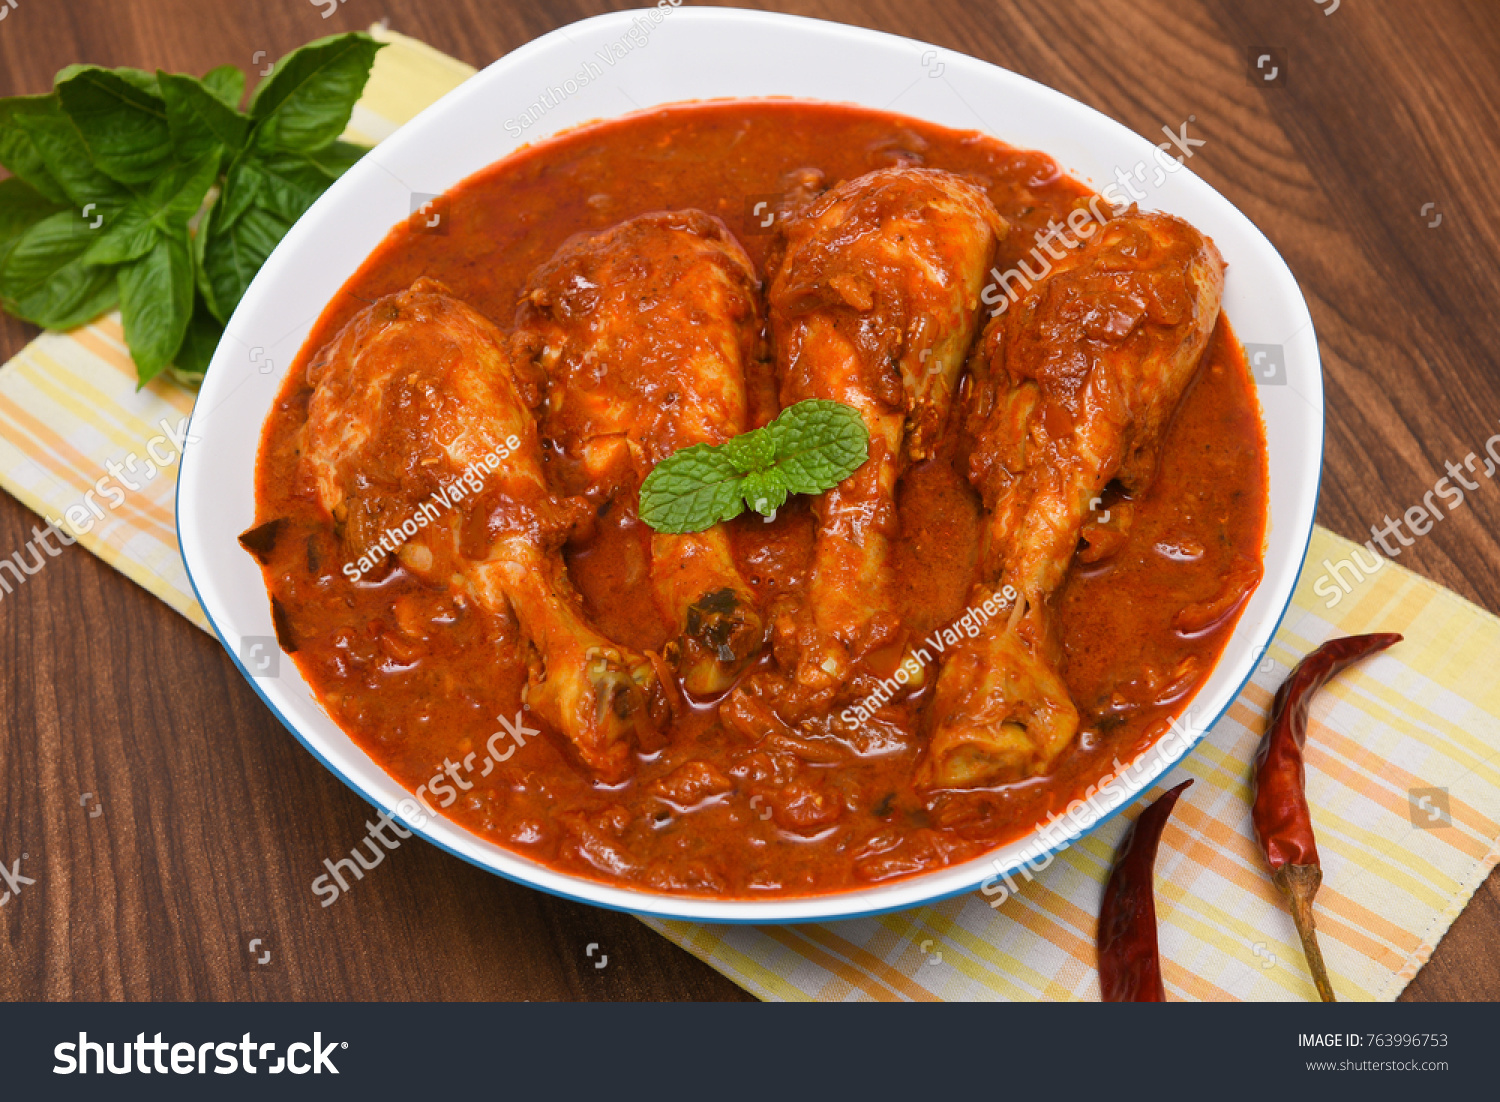 Top View Kadai Chicken Karahi Curry Food And Drink Stock Image